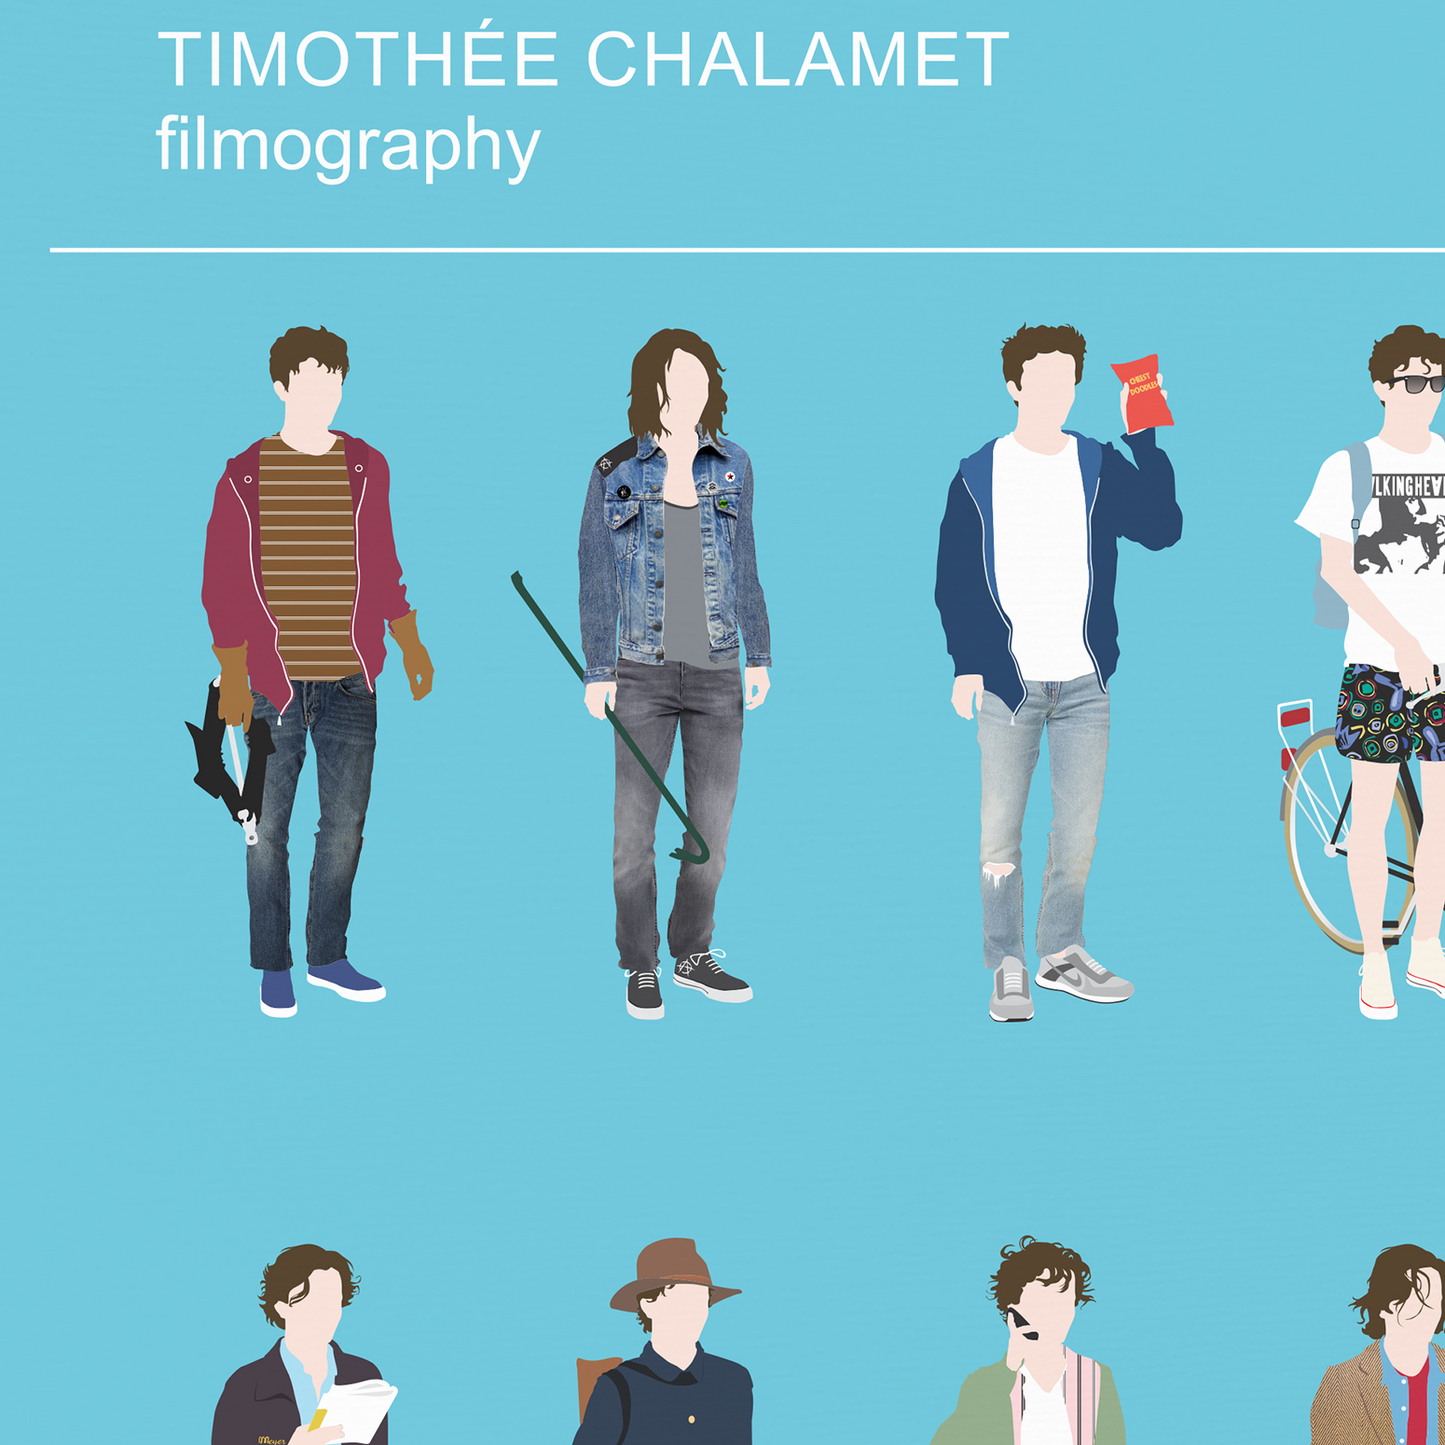 Timothée Chalamet Filmography Poster, wardrobe of his films